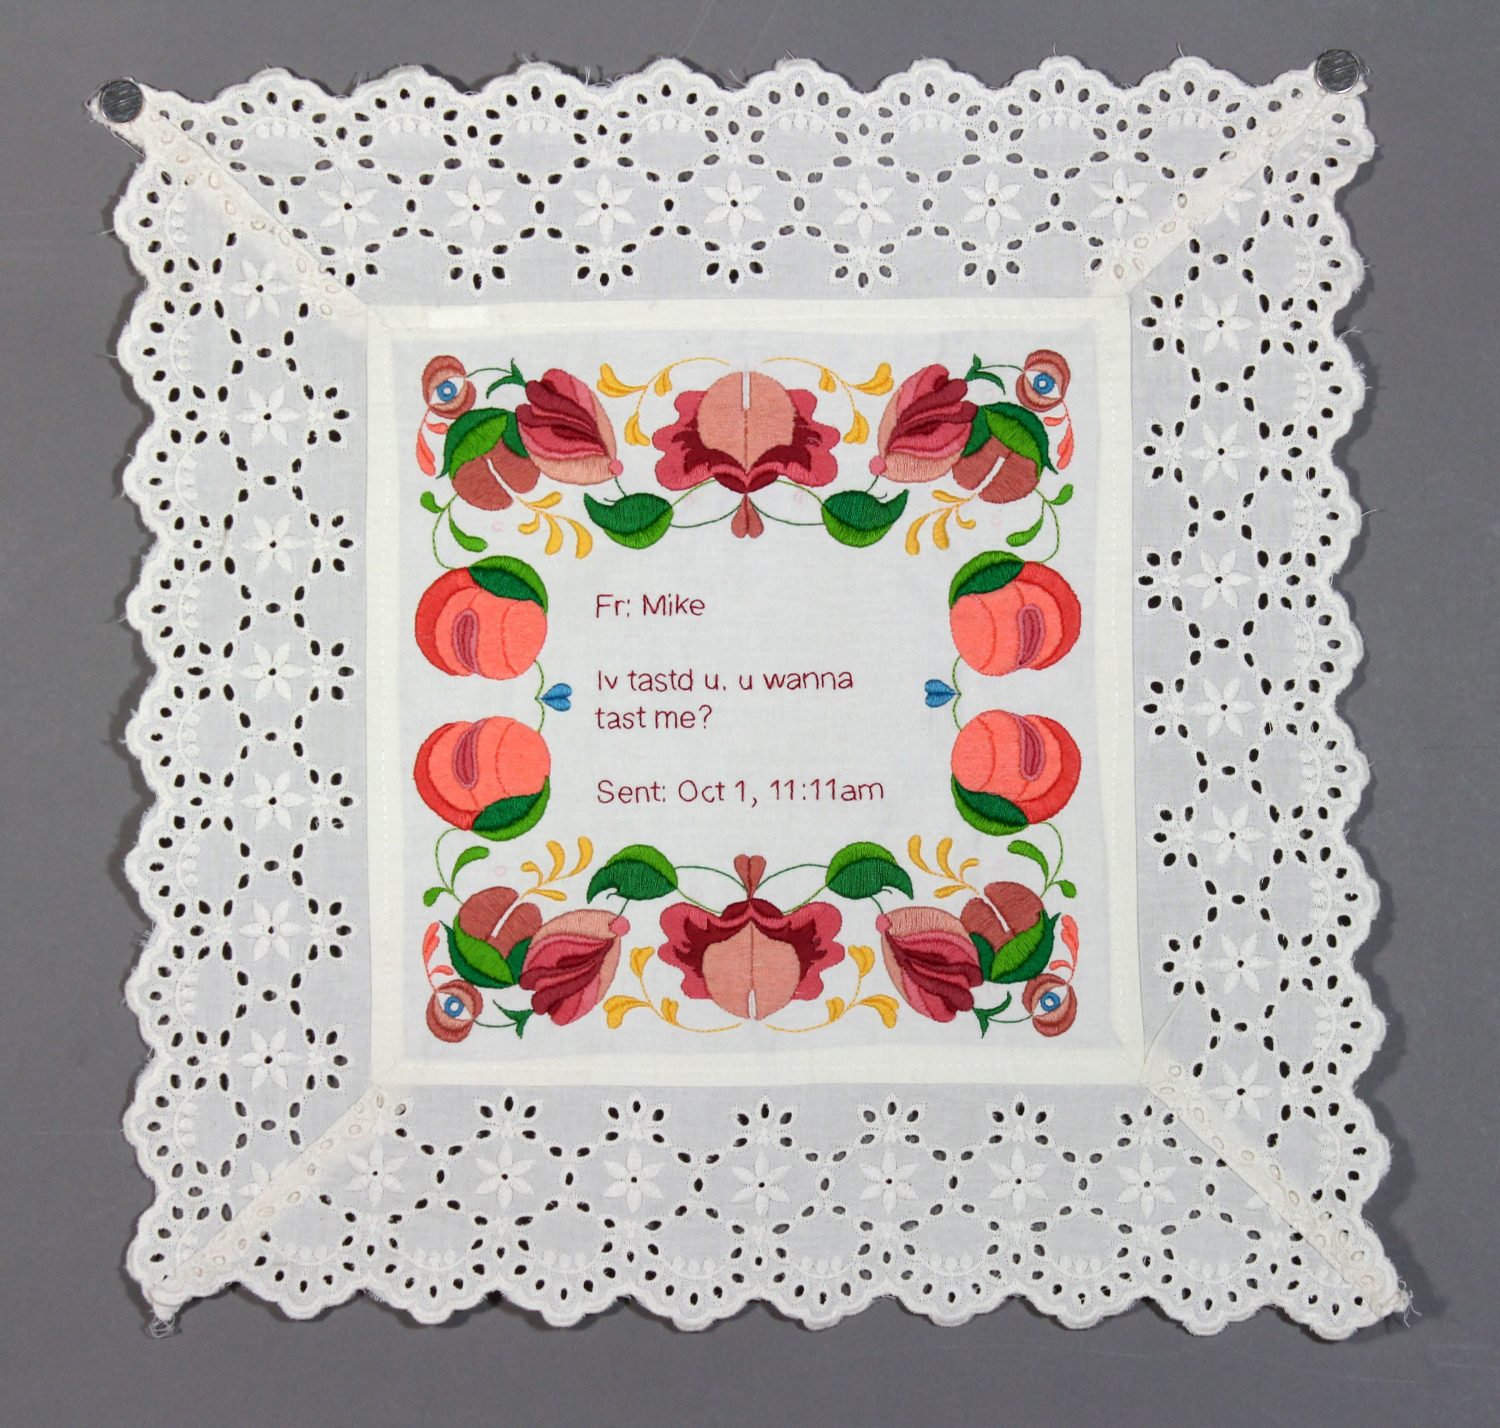 Kathyrn Shinko - Dirty Sampler Series - iv tastd u - hand embroidery on cloth (2014)